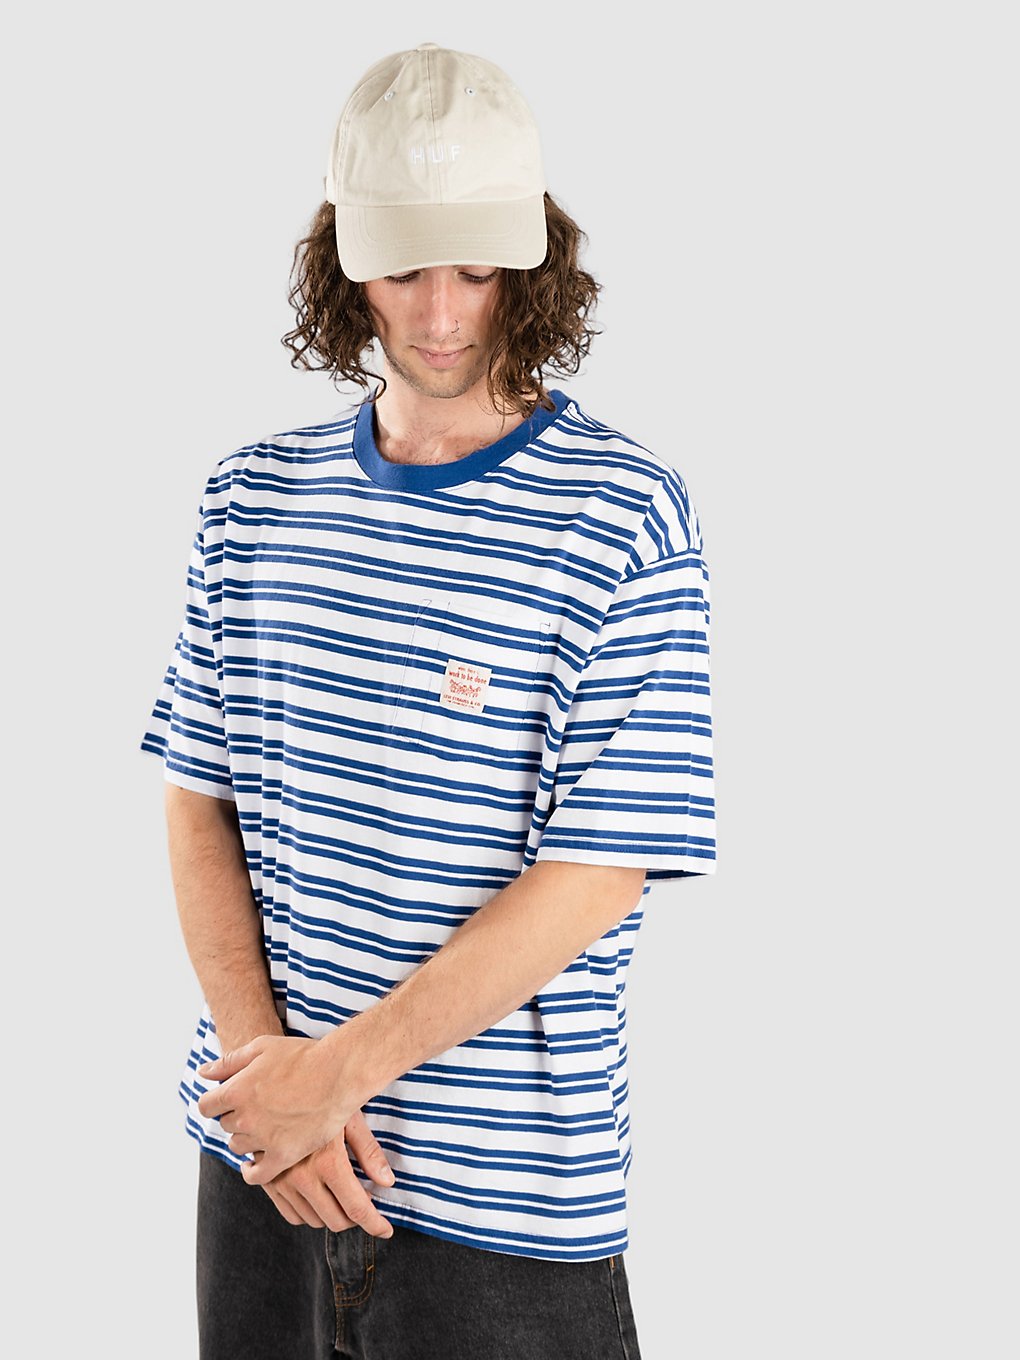 Levi's Workwear T-Shirt a58500002 stripe kaufen